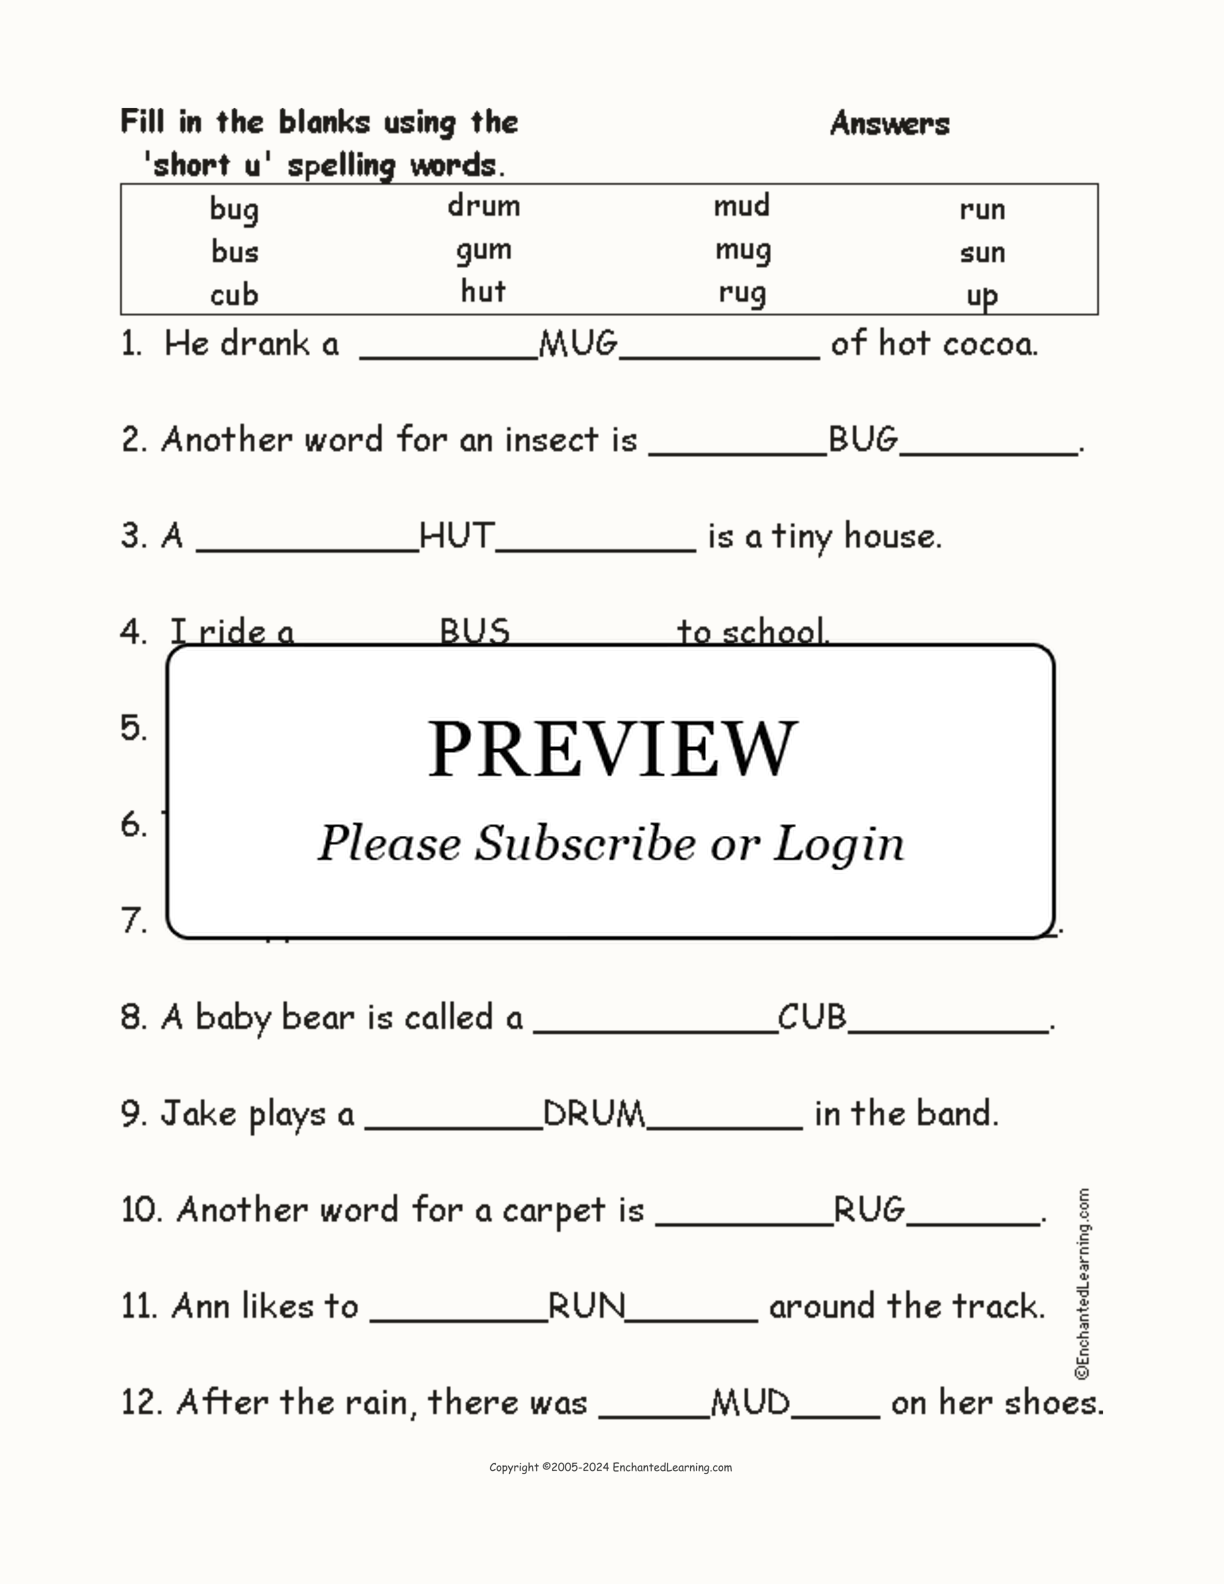 Short U: Spelling Word Questions interactive worksheet page 2